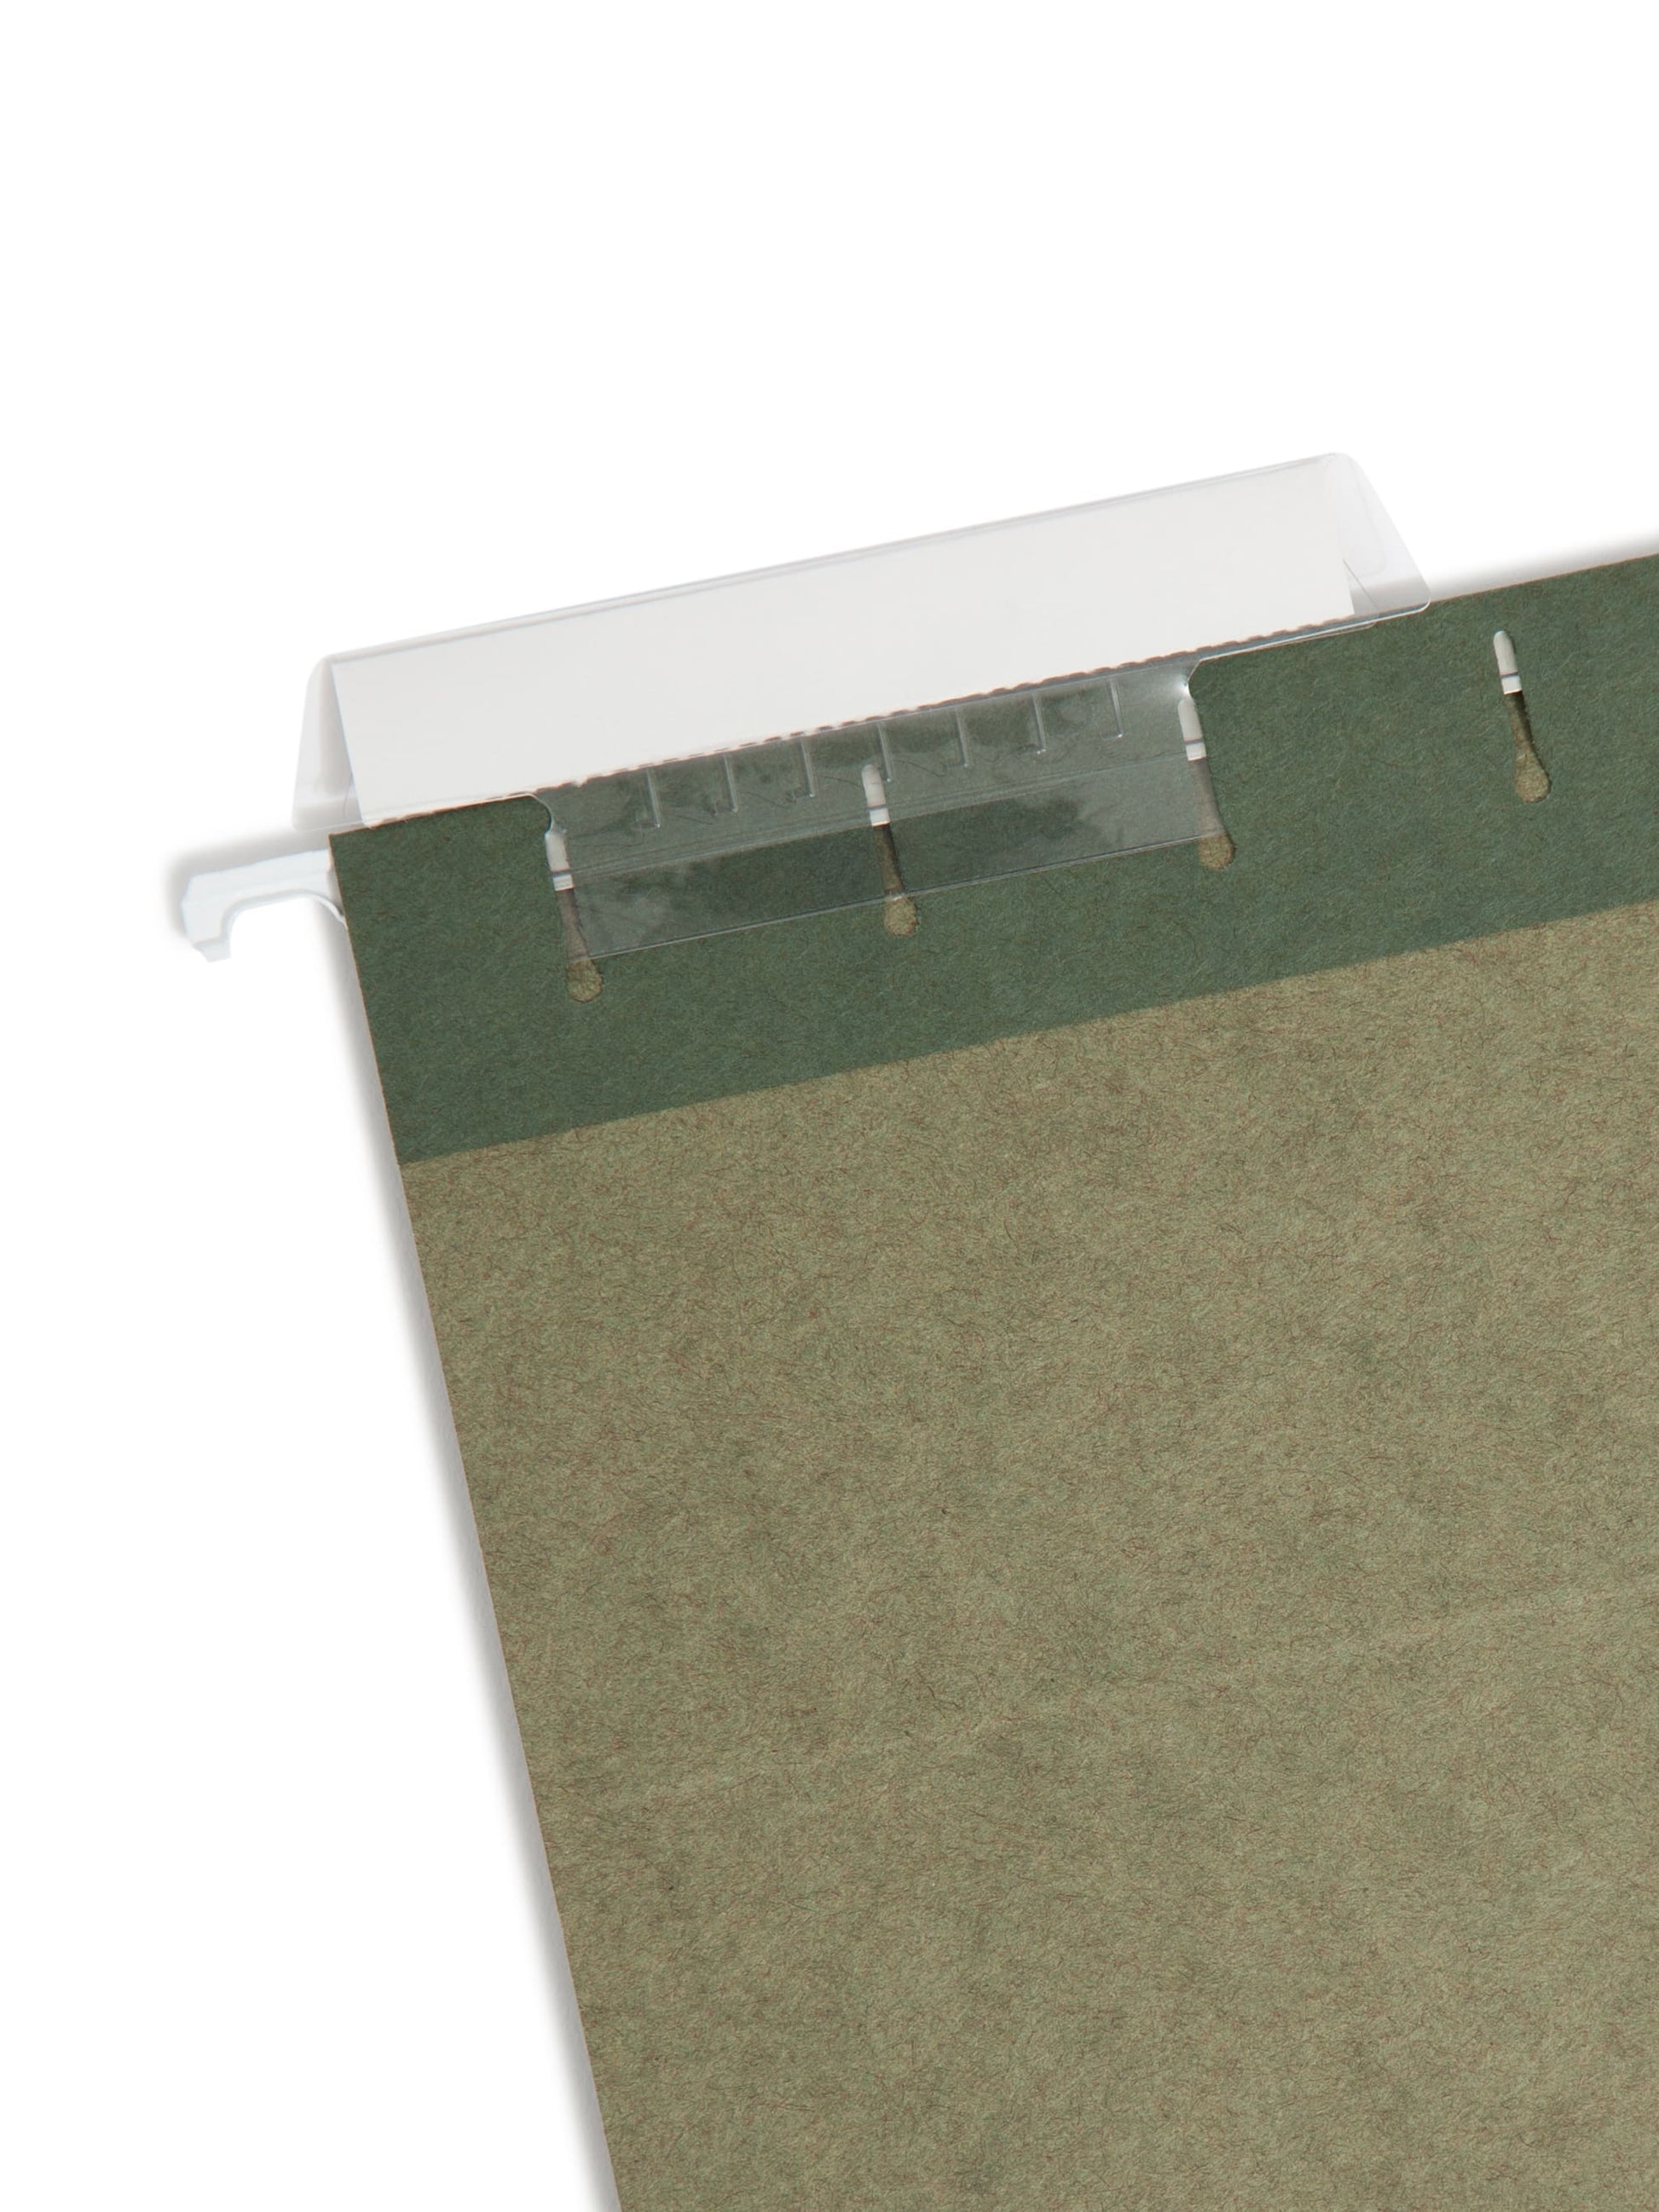 Standard Hanging File Folders with 1/3-Cut Tabs, Standard Green Color, Letter Size, Set of 25, 086486640350